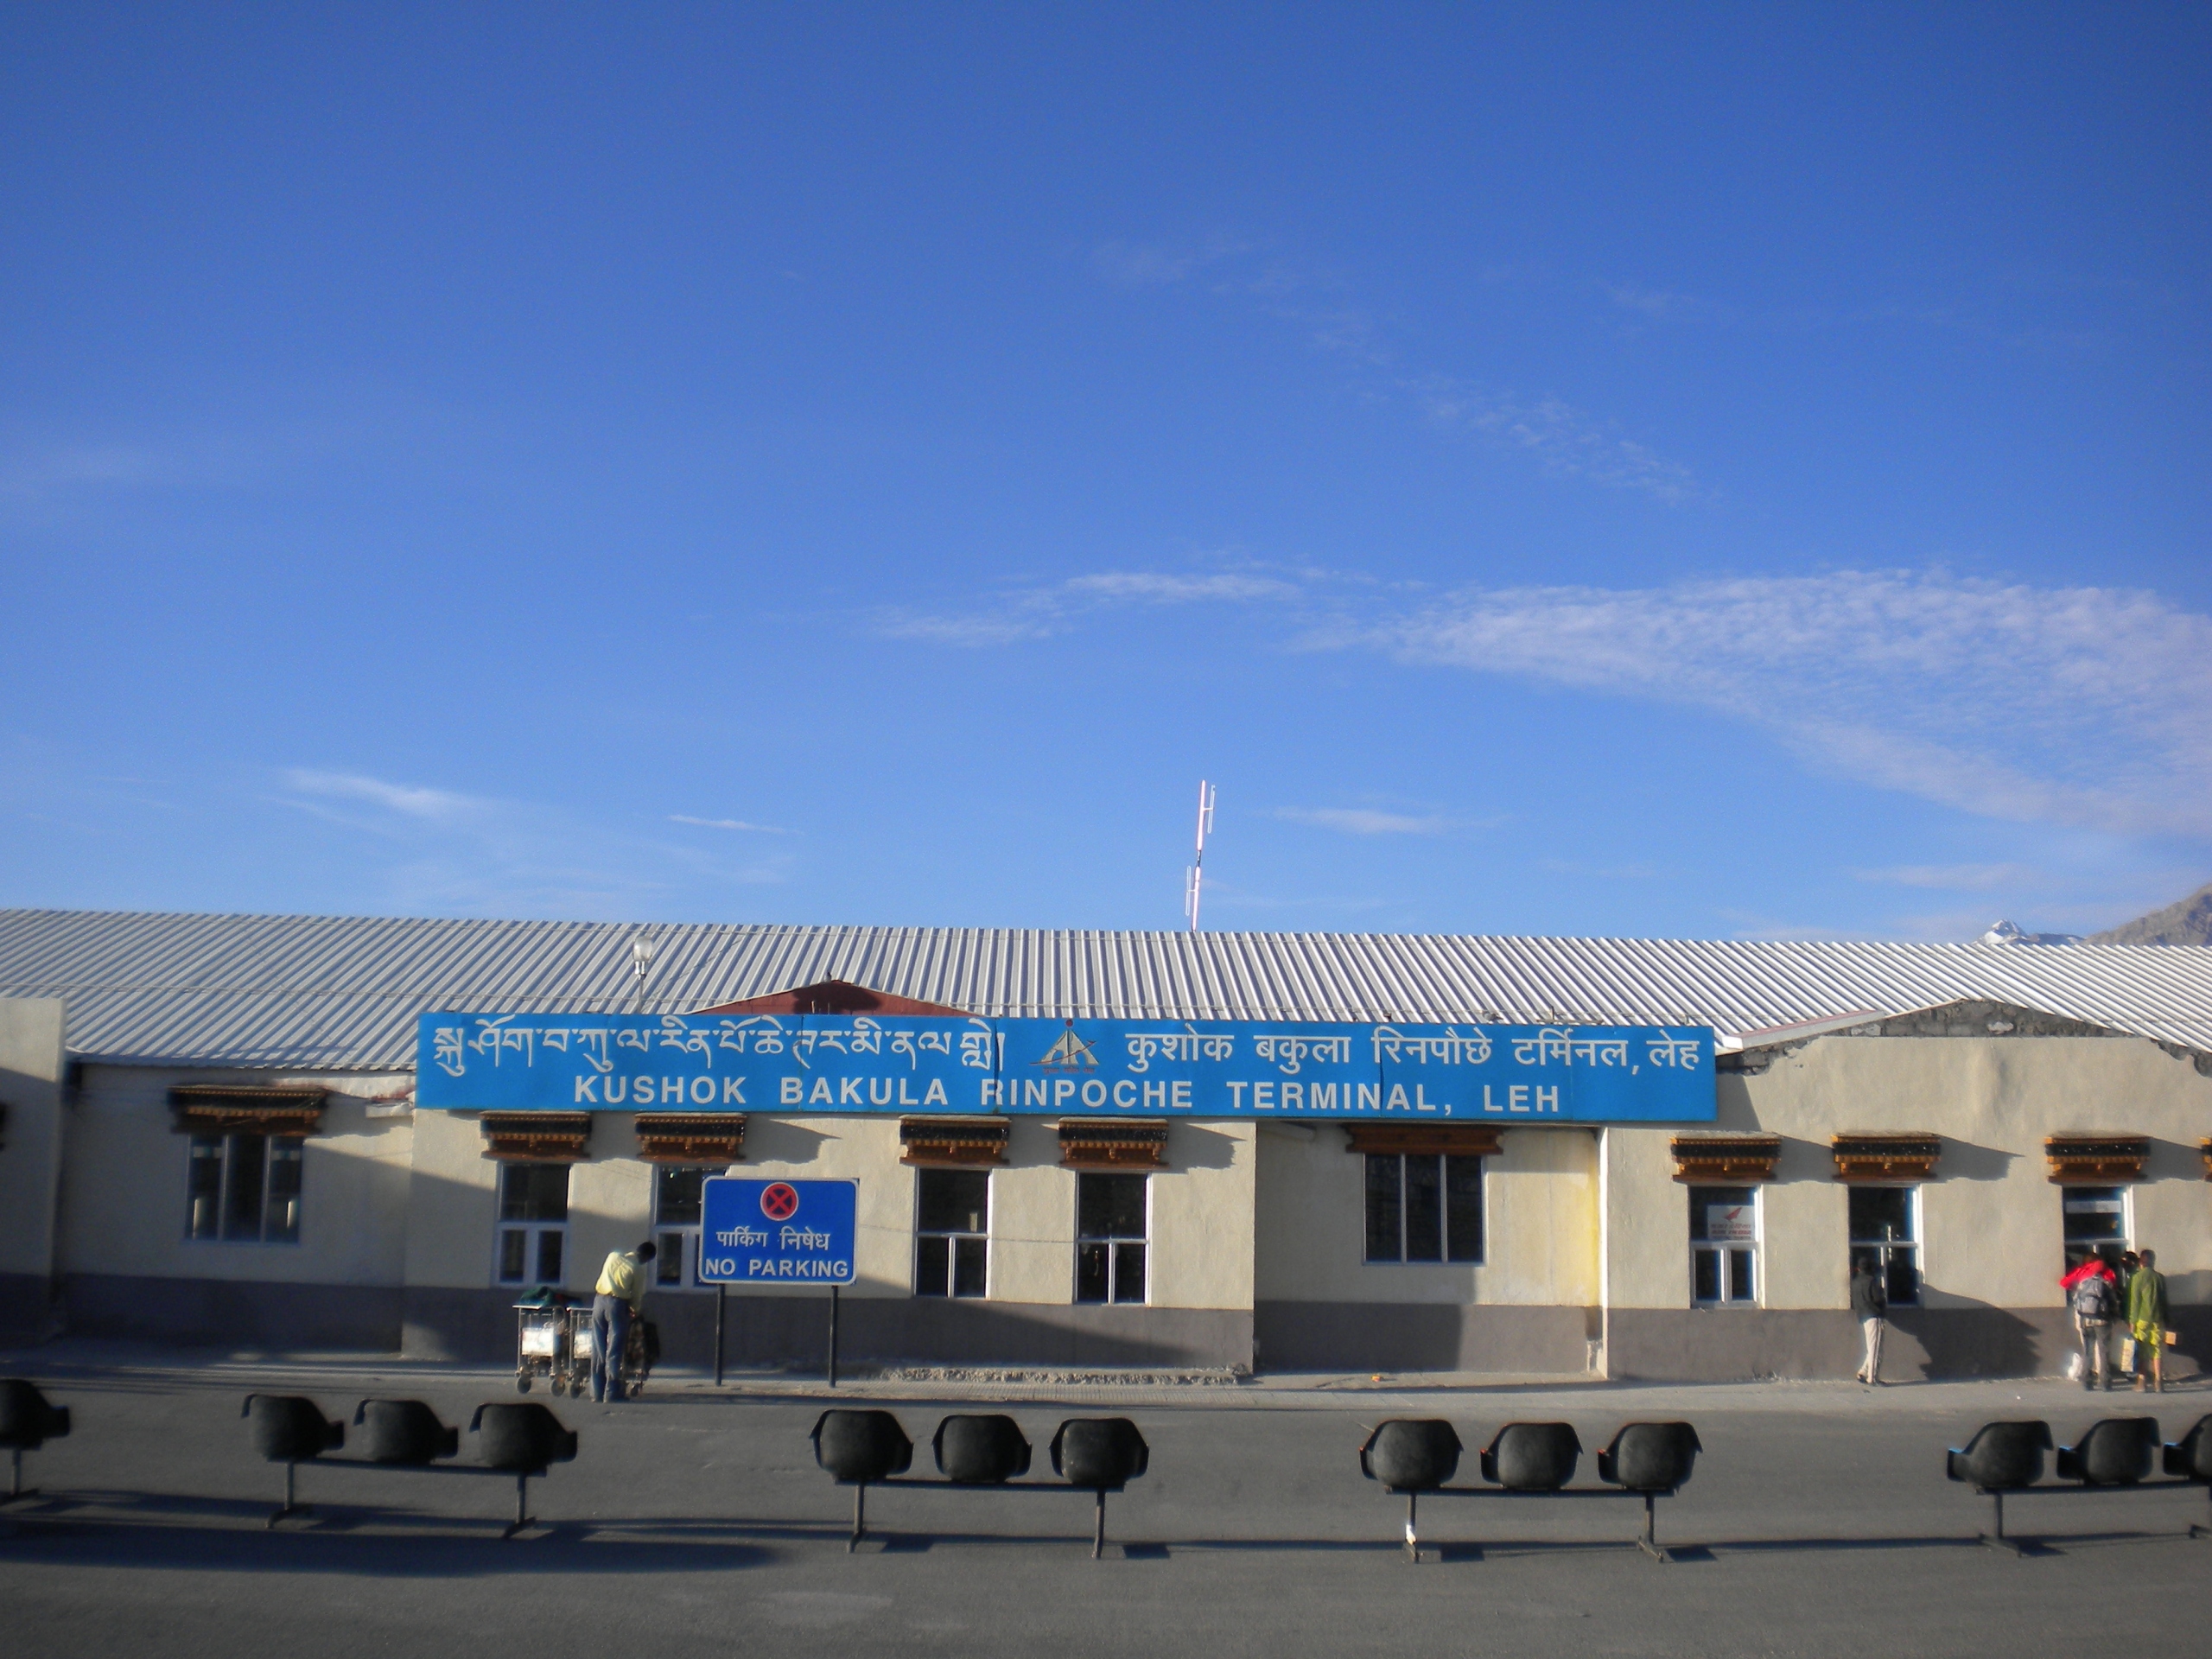 Kushok Bakula Rimpochee Airport, Leh (IXL)